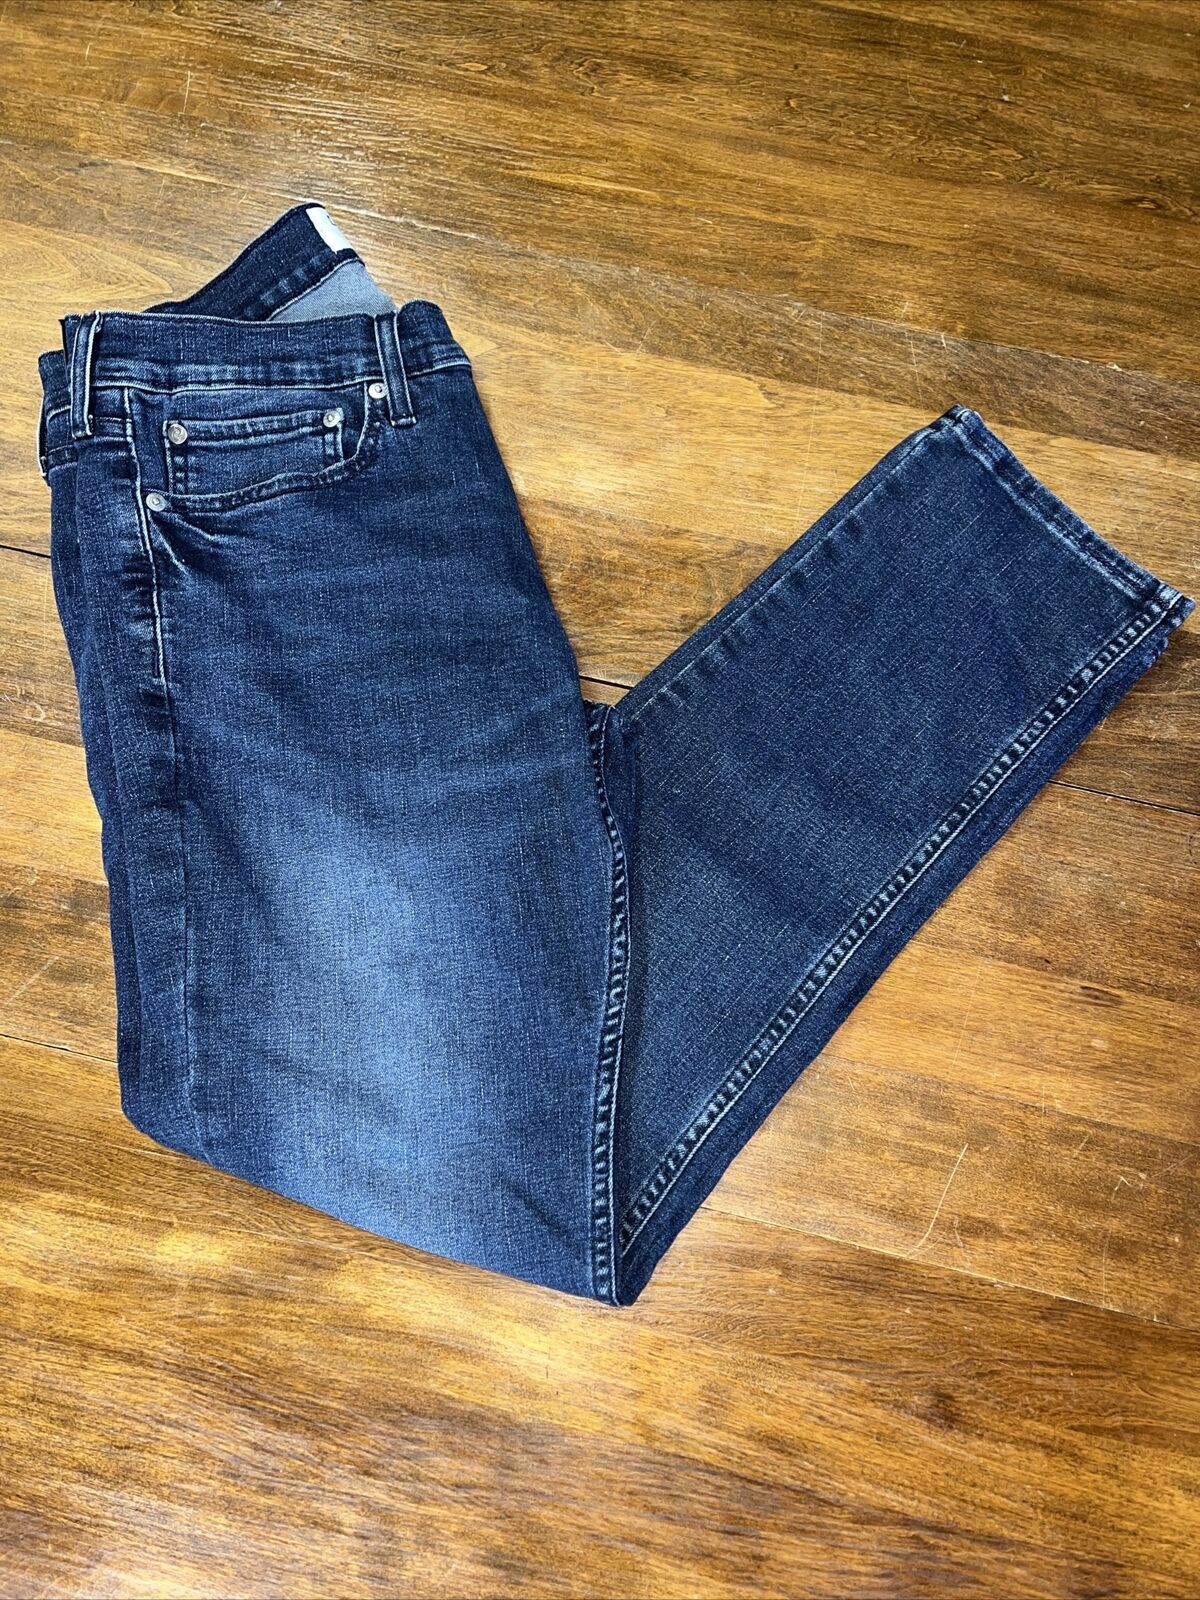 Levi's Denizen 288 Skinny Jeans Mens 32x30 Actual  Taper Fit Dark  Wash | eBay